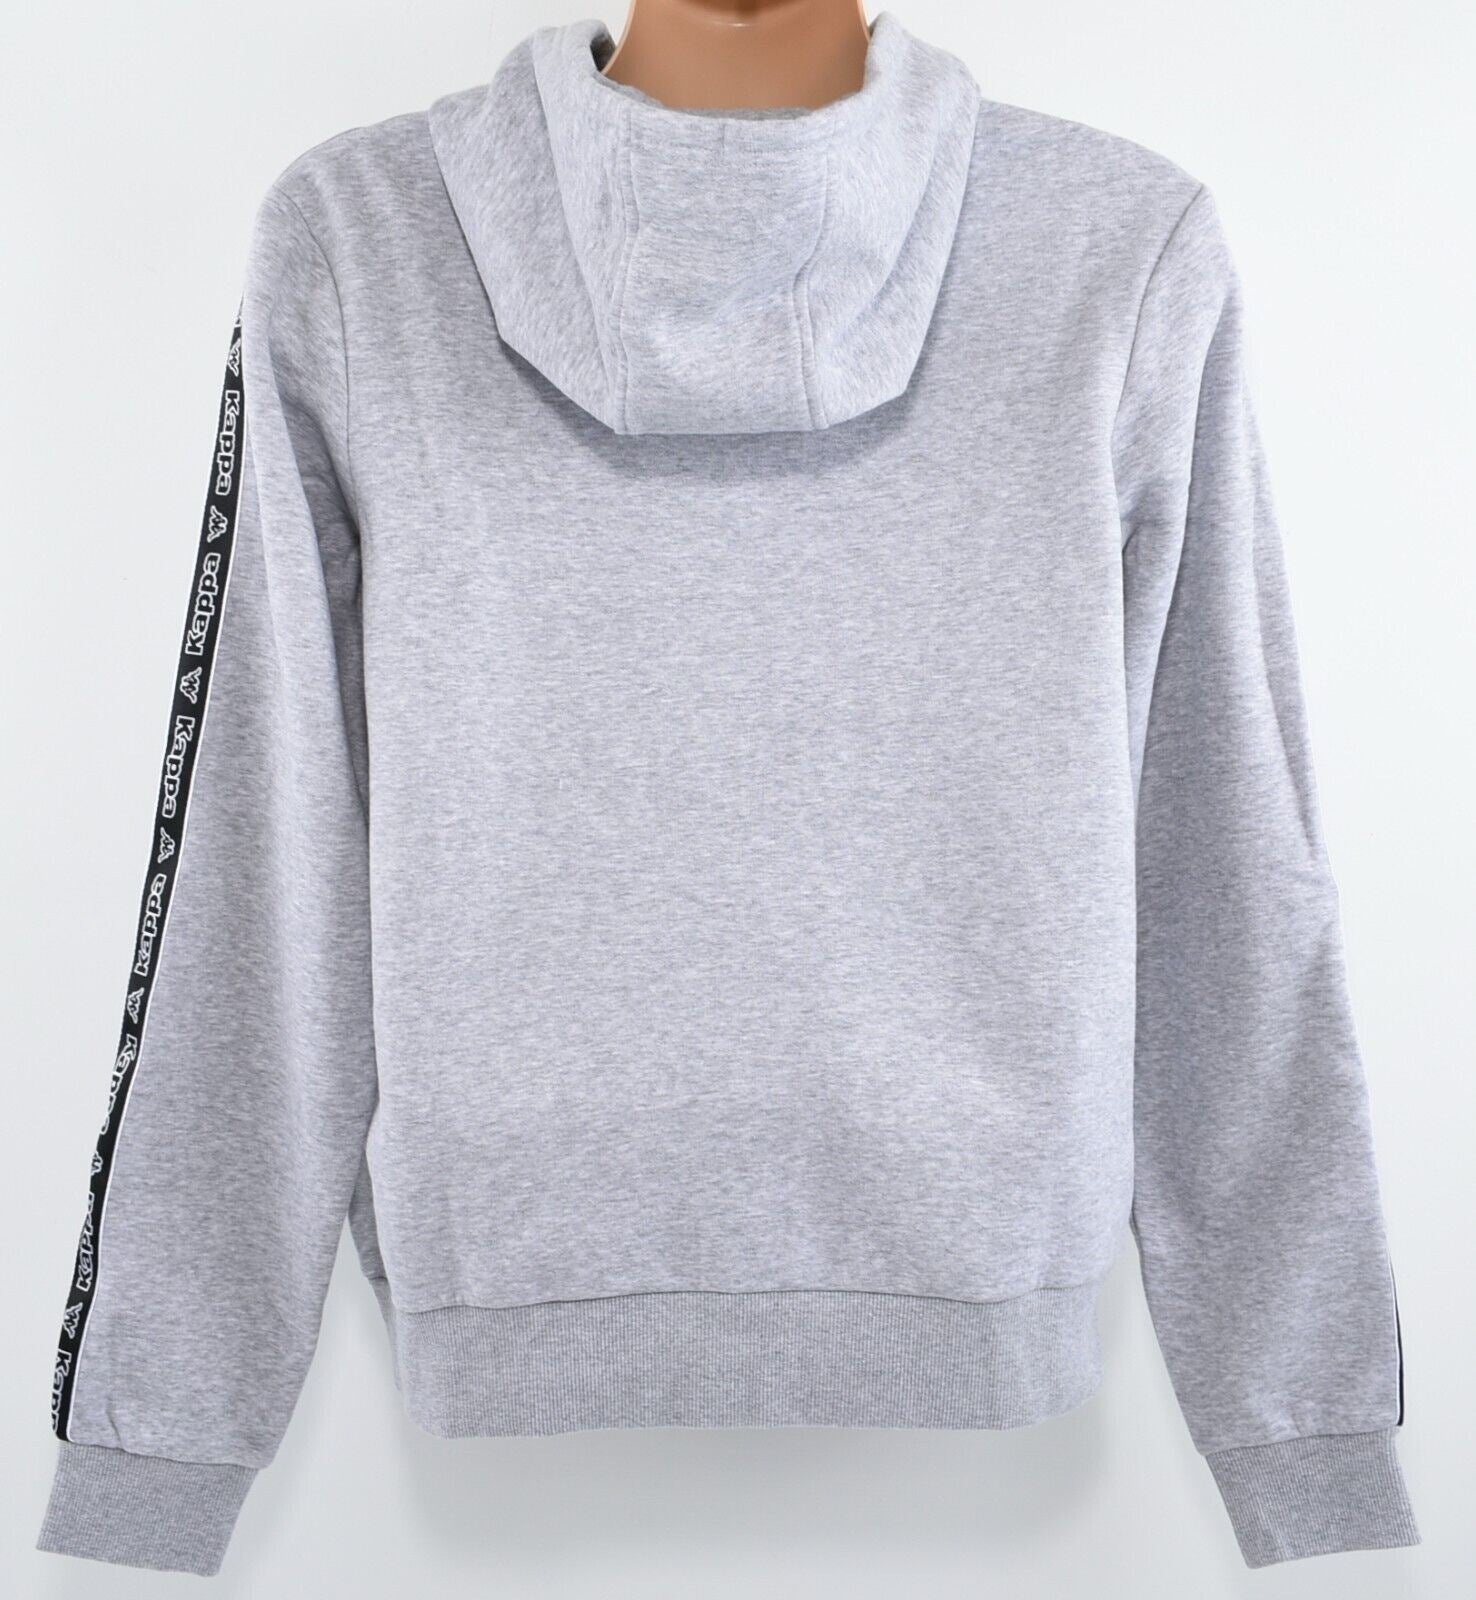 KAPPA Men's Hoodie Sweatshirt, Sleeve Logo Tape, Grey, size XL